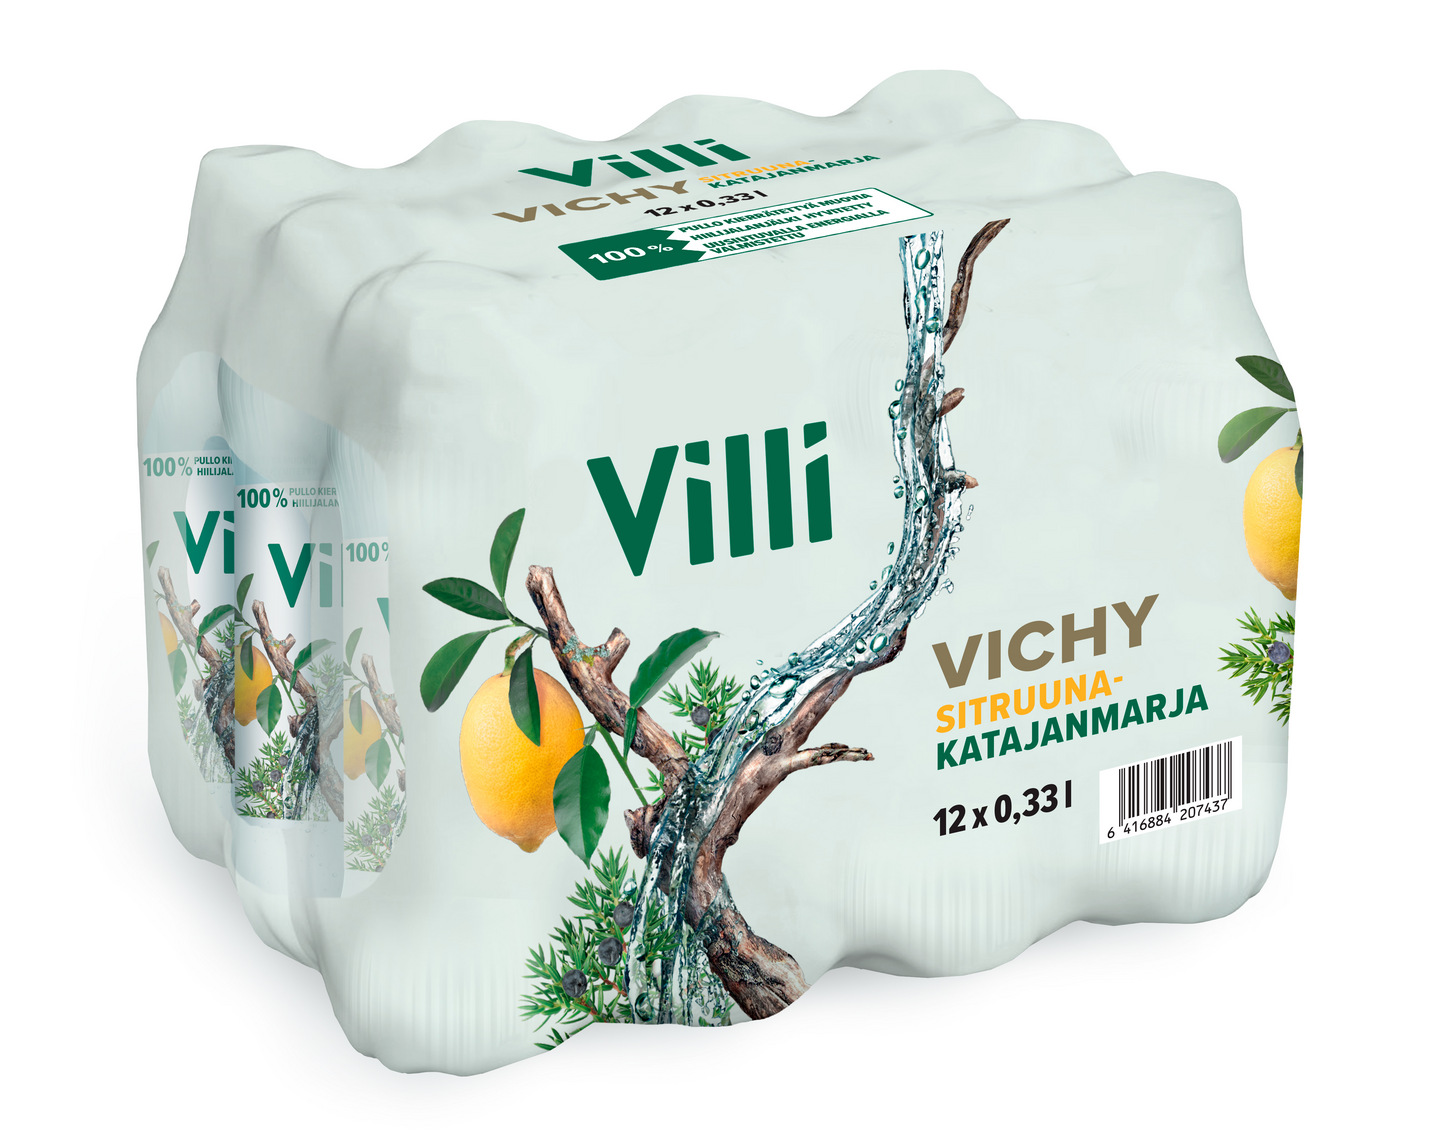 Villi Vichy sitruuna-katajanmarja 0,33l 12-pack PUOLILAVA